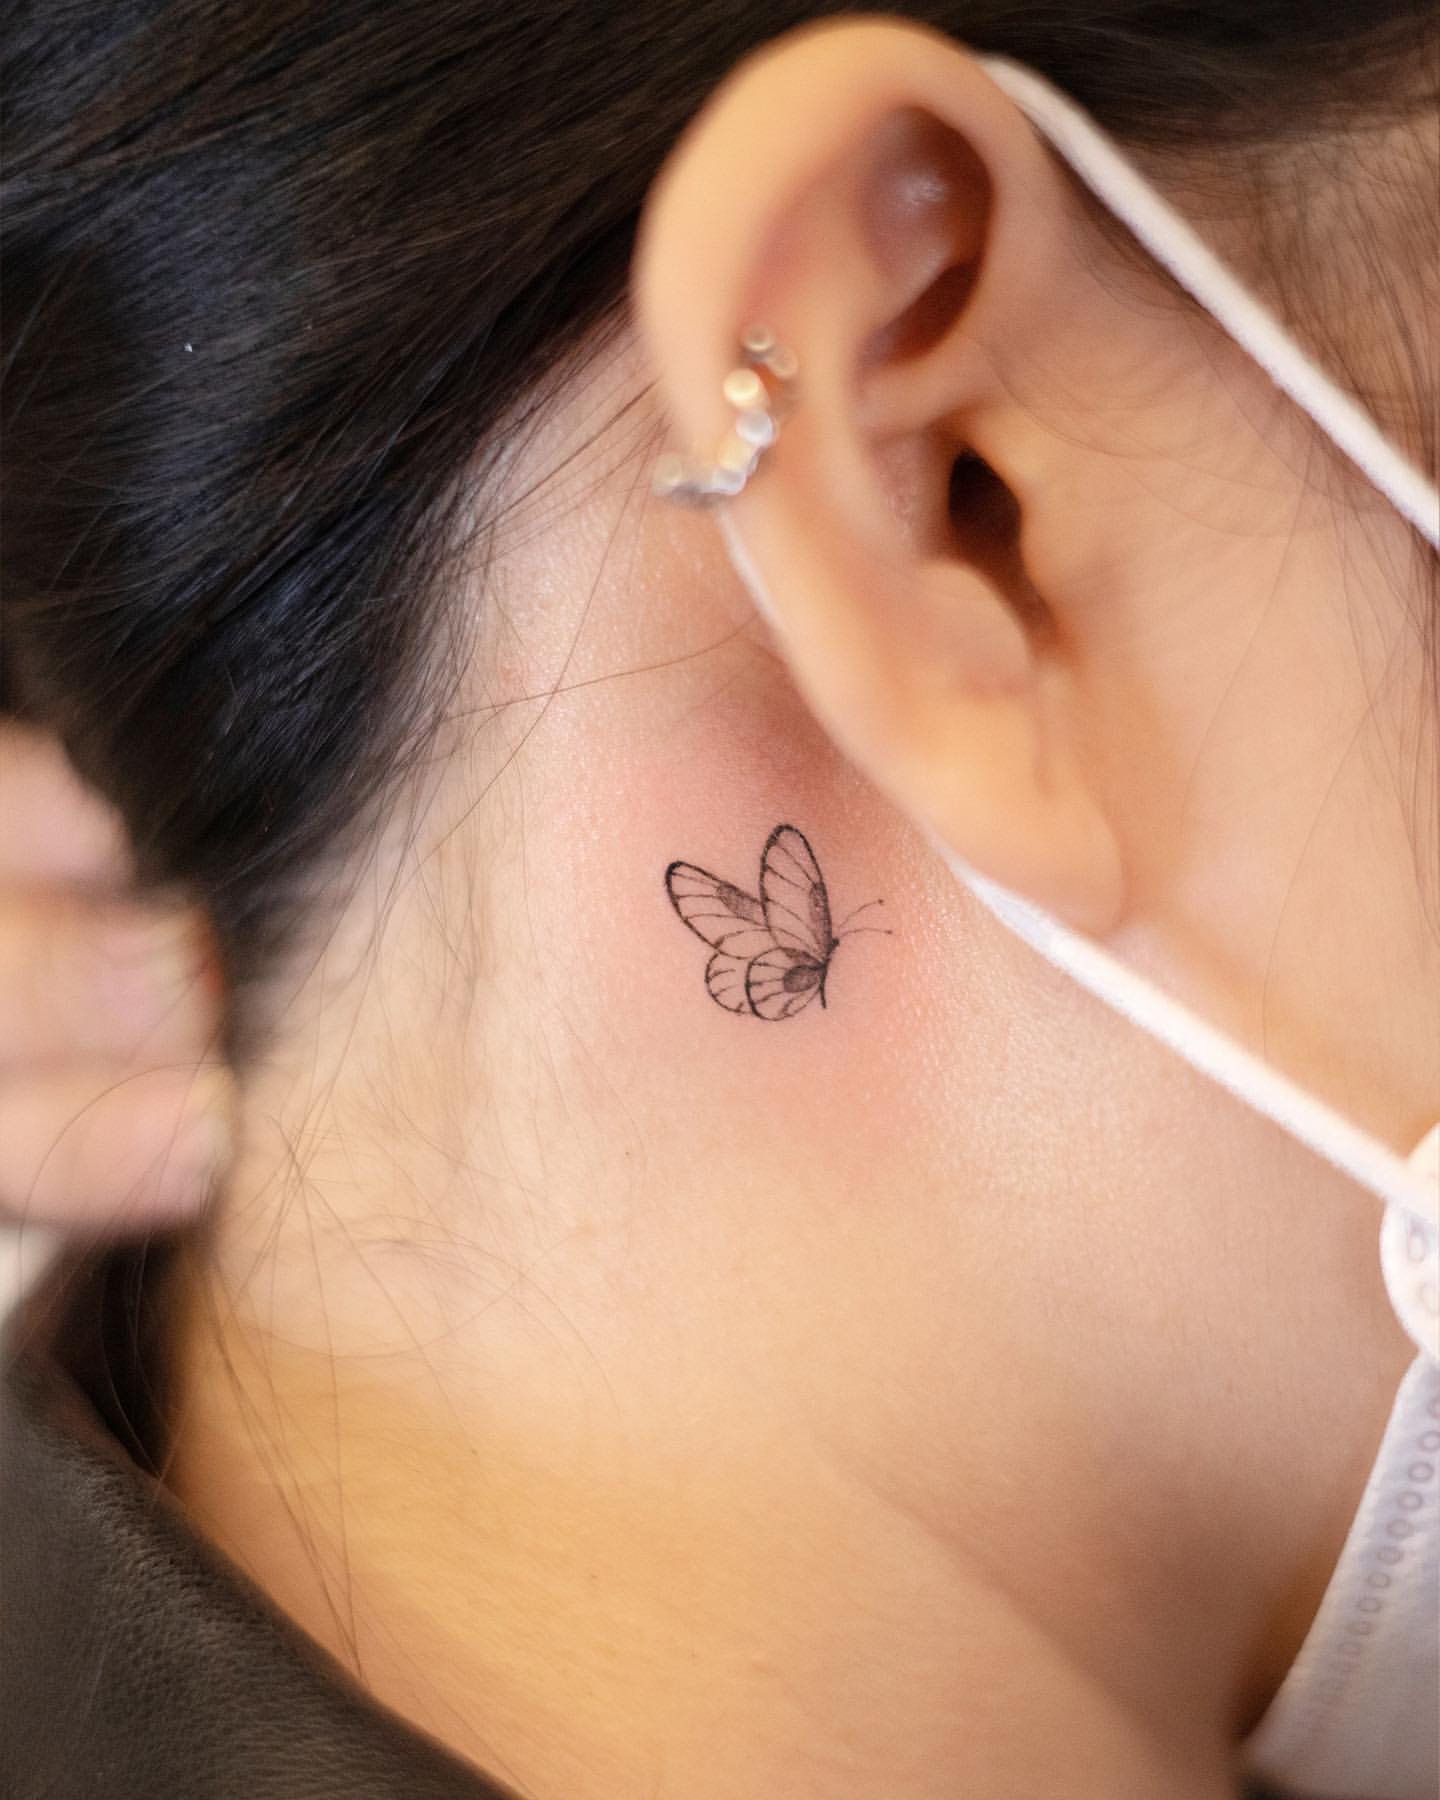 Behind the Ear Tattoos 29